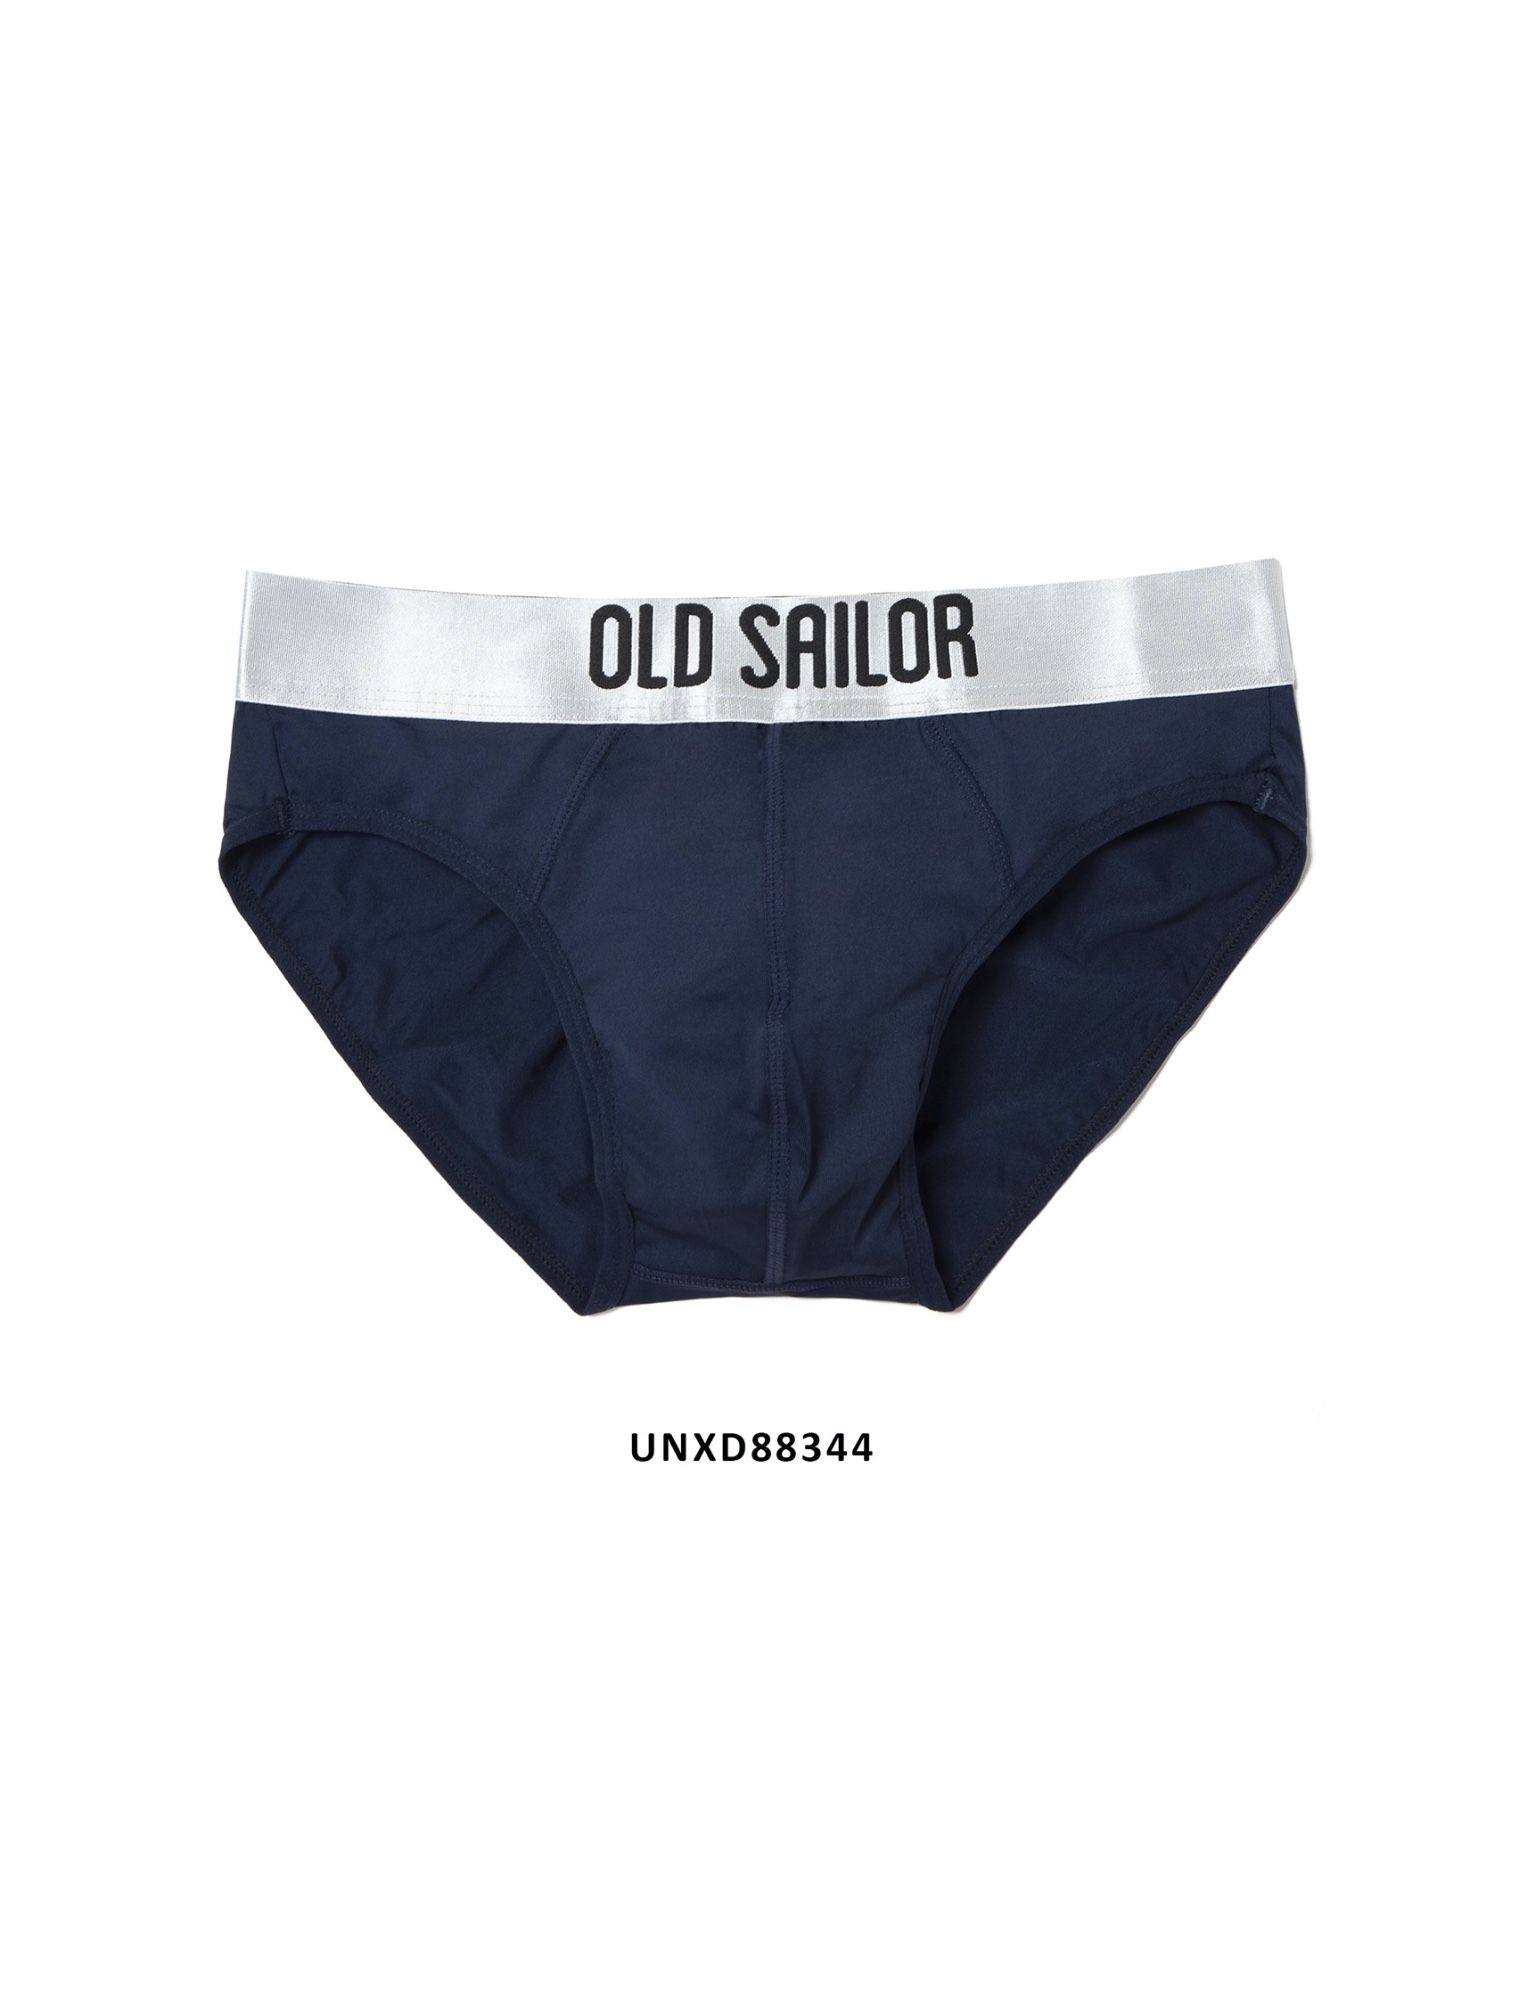 Quần lót Old Sailor - O.S.L BRIEF - NAVY UNXD883441 -  xanh đen - big size upto 4Xl